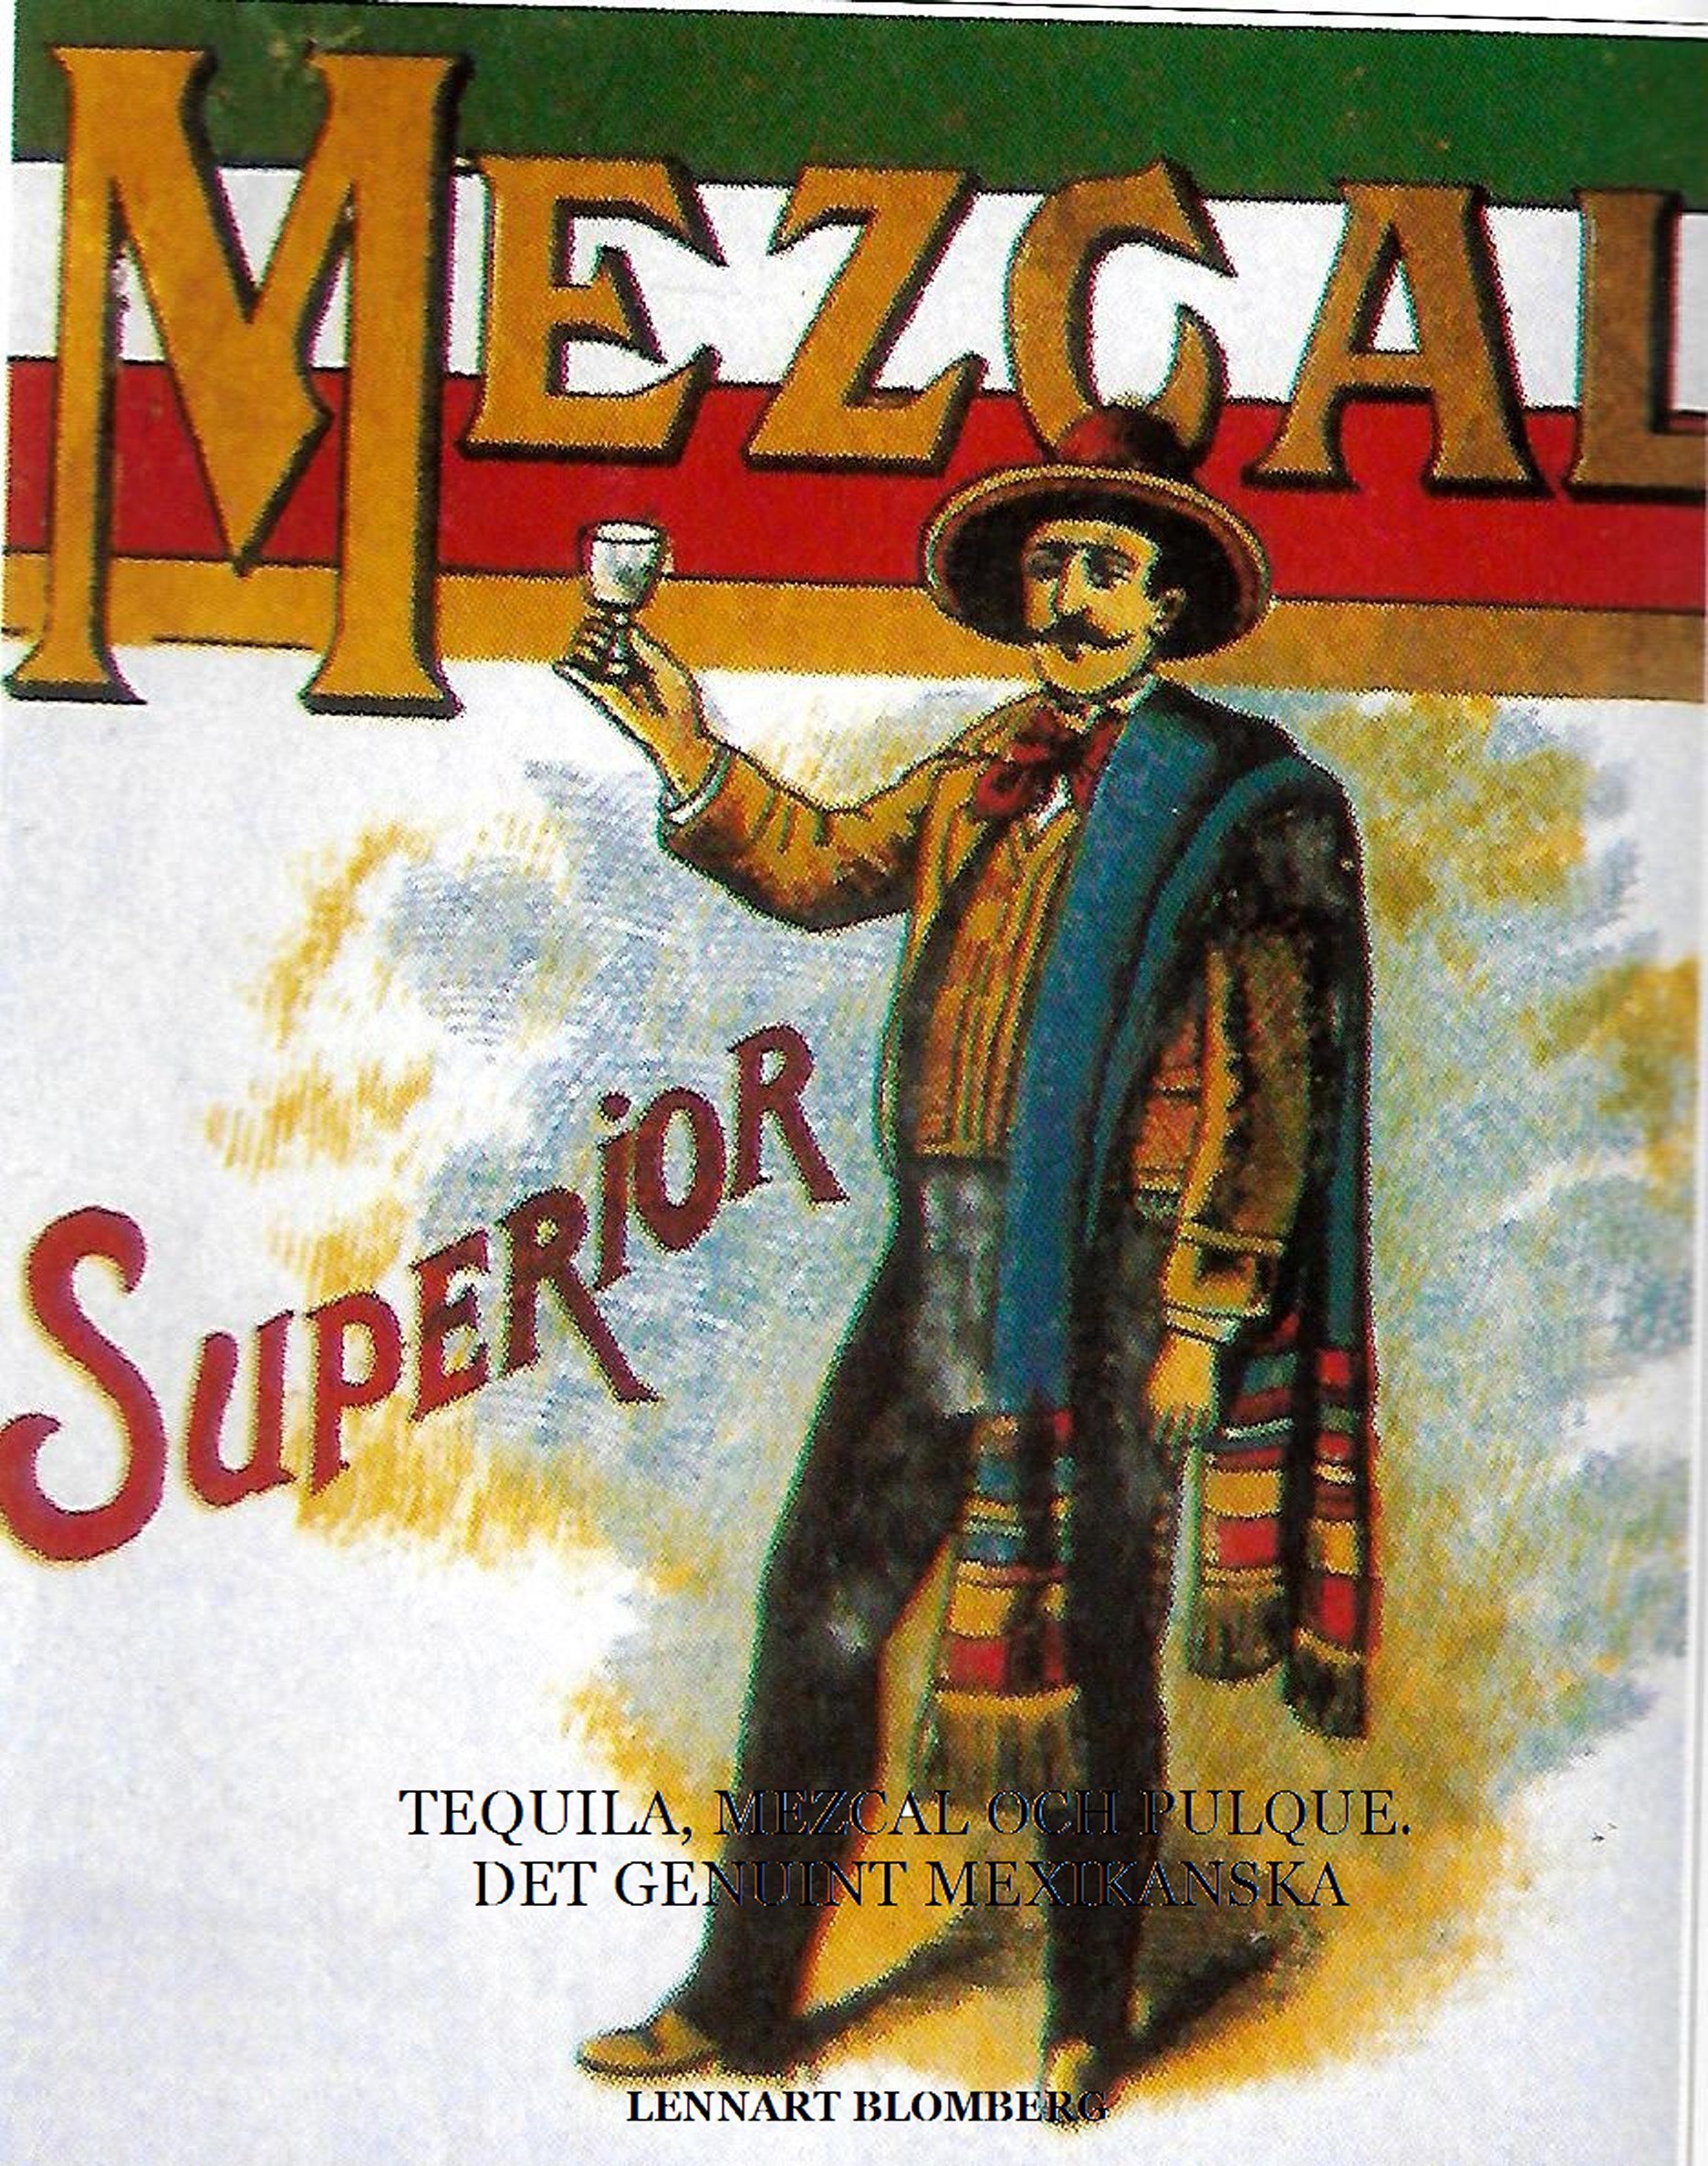 Tequila, Mezcal och Pulque. Det genuint Mexikanska, e-bog af Lennart Blomberg